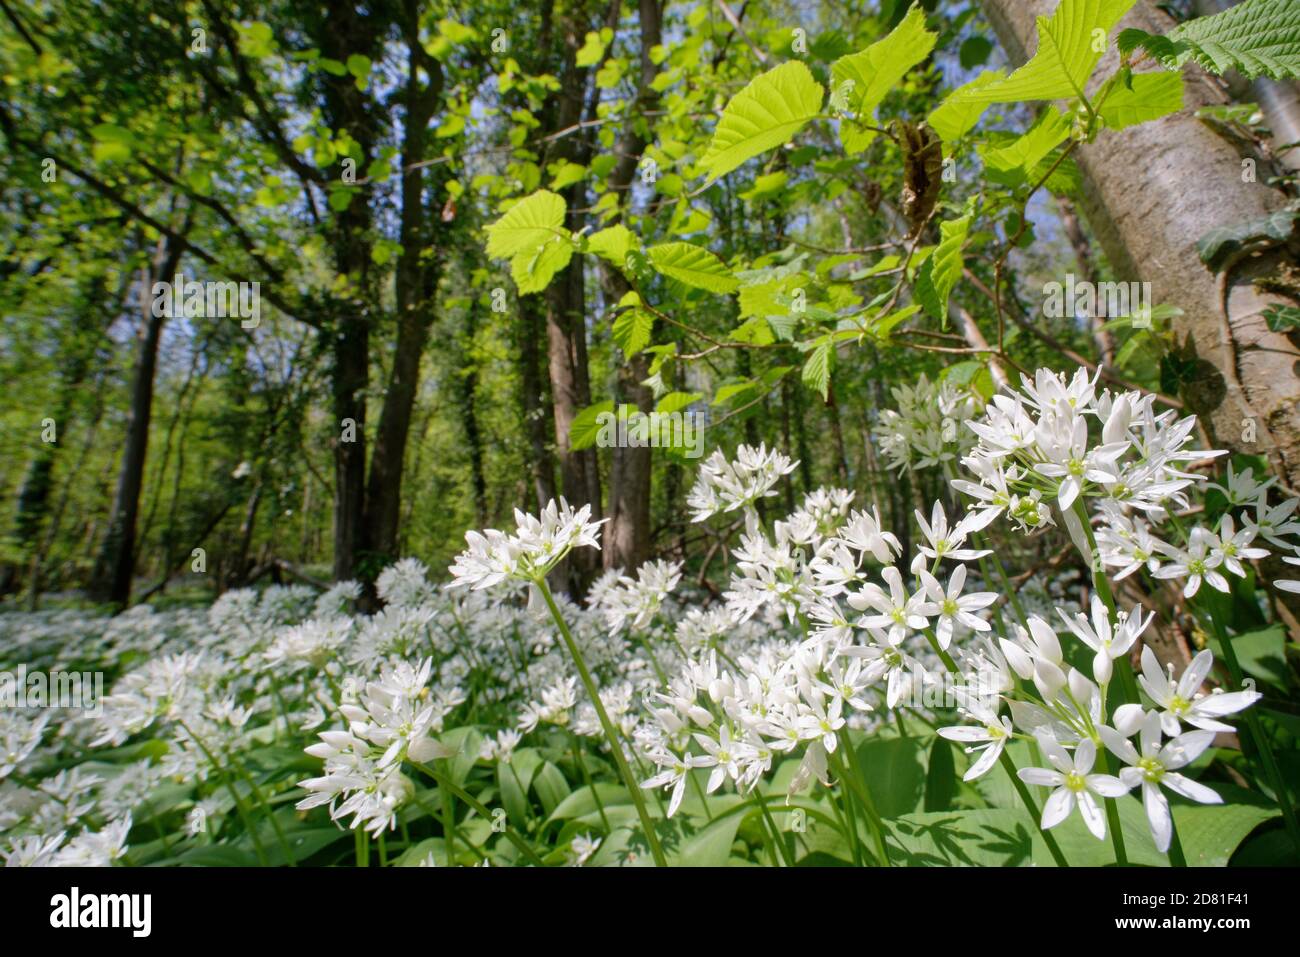 Wild garlic / Ramsons (Allium ursinum) carpet flowering in woodland understory, Wiltshire, UK, April. Stock Photo